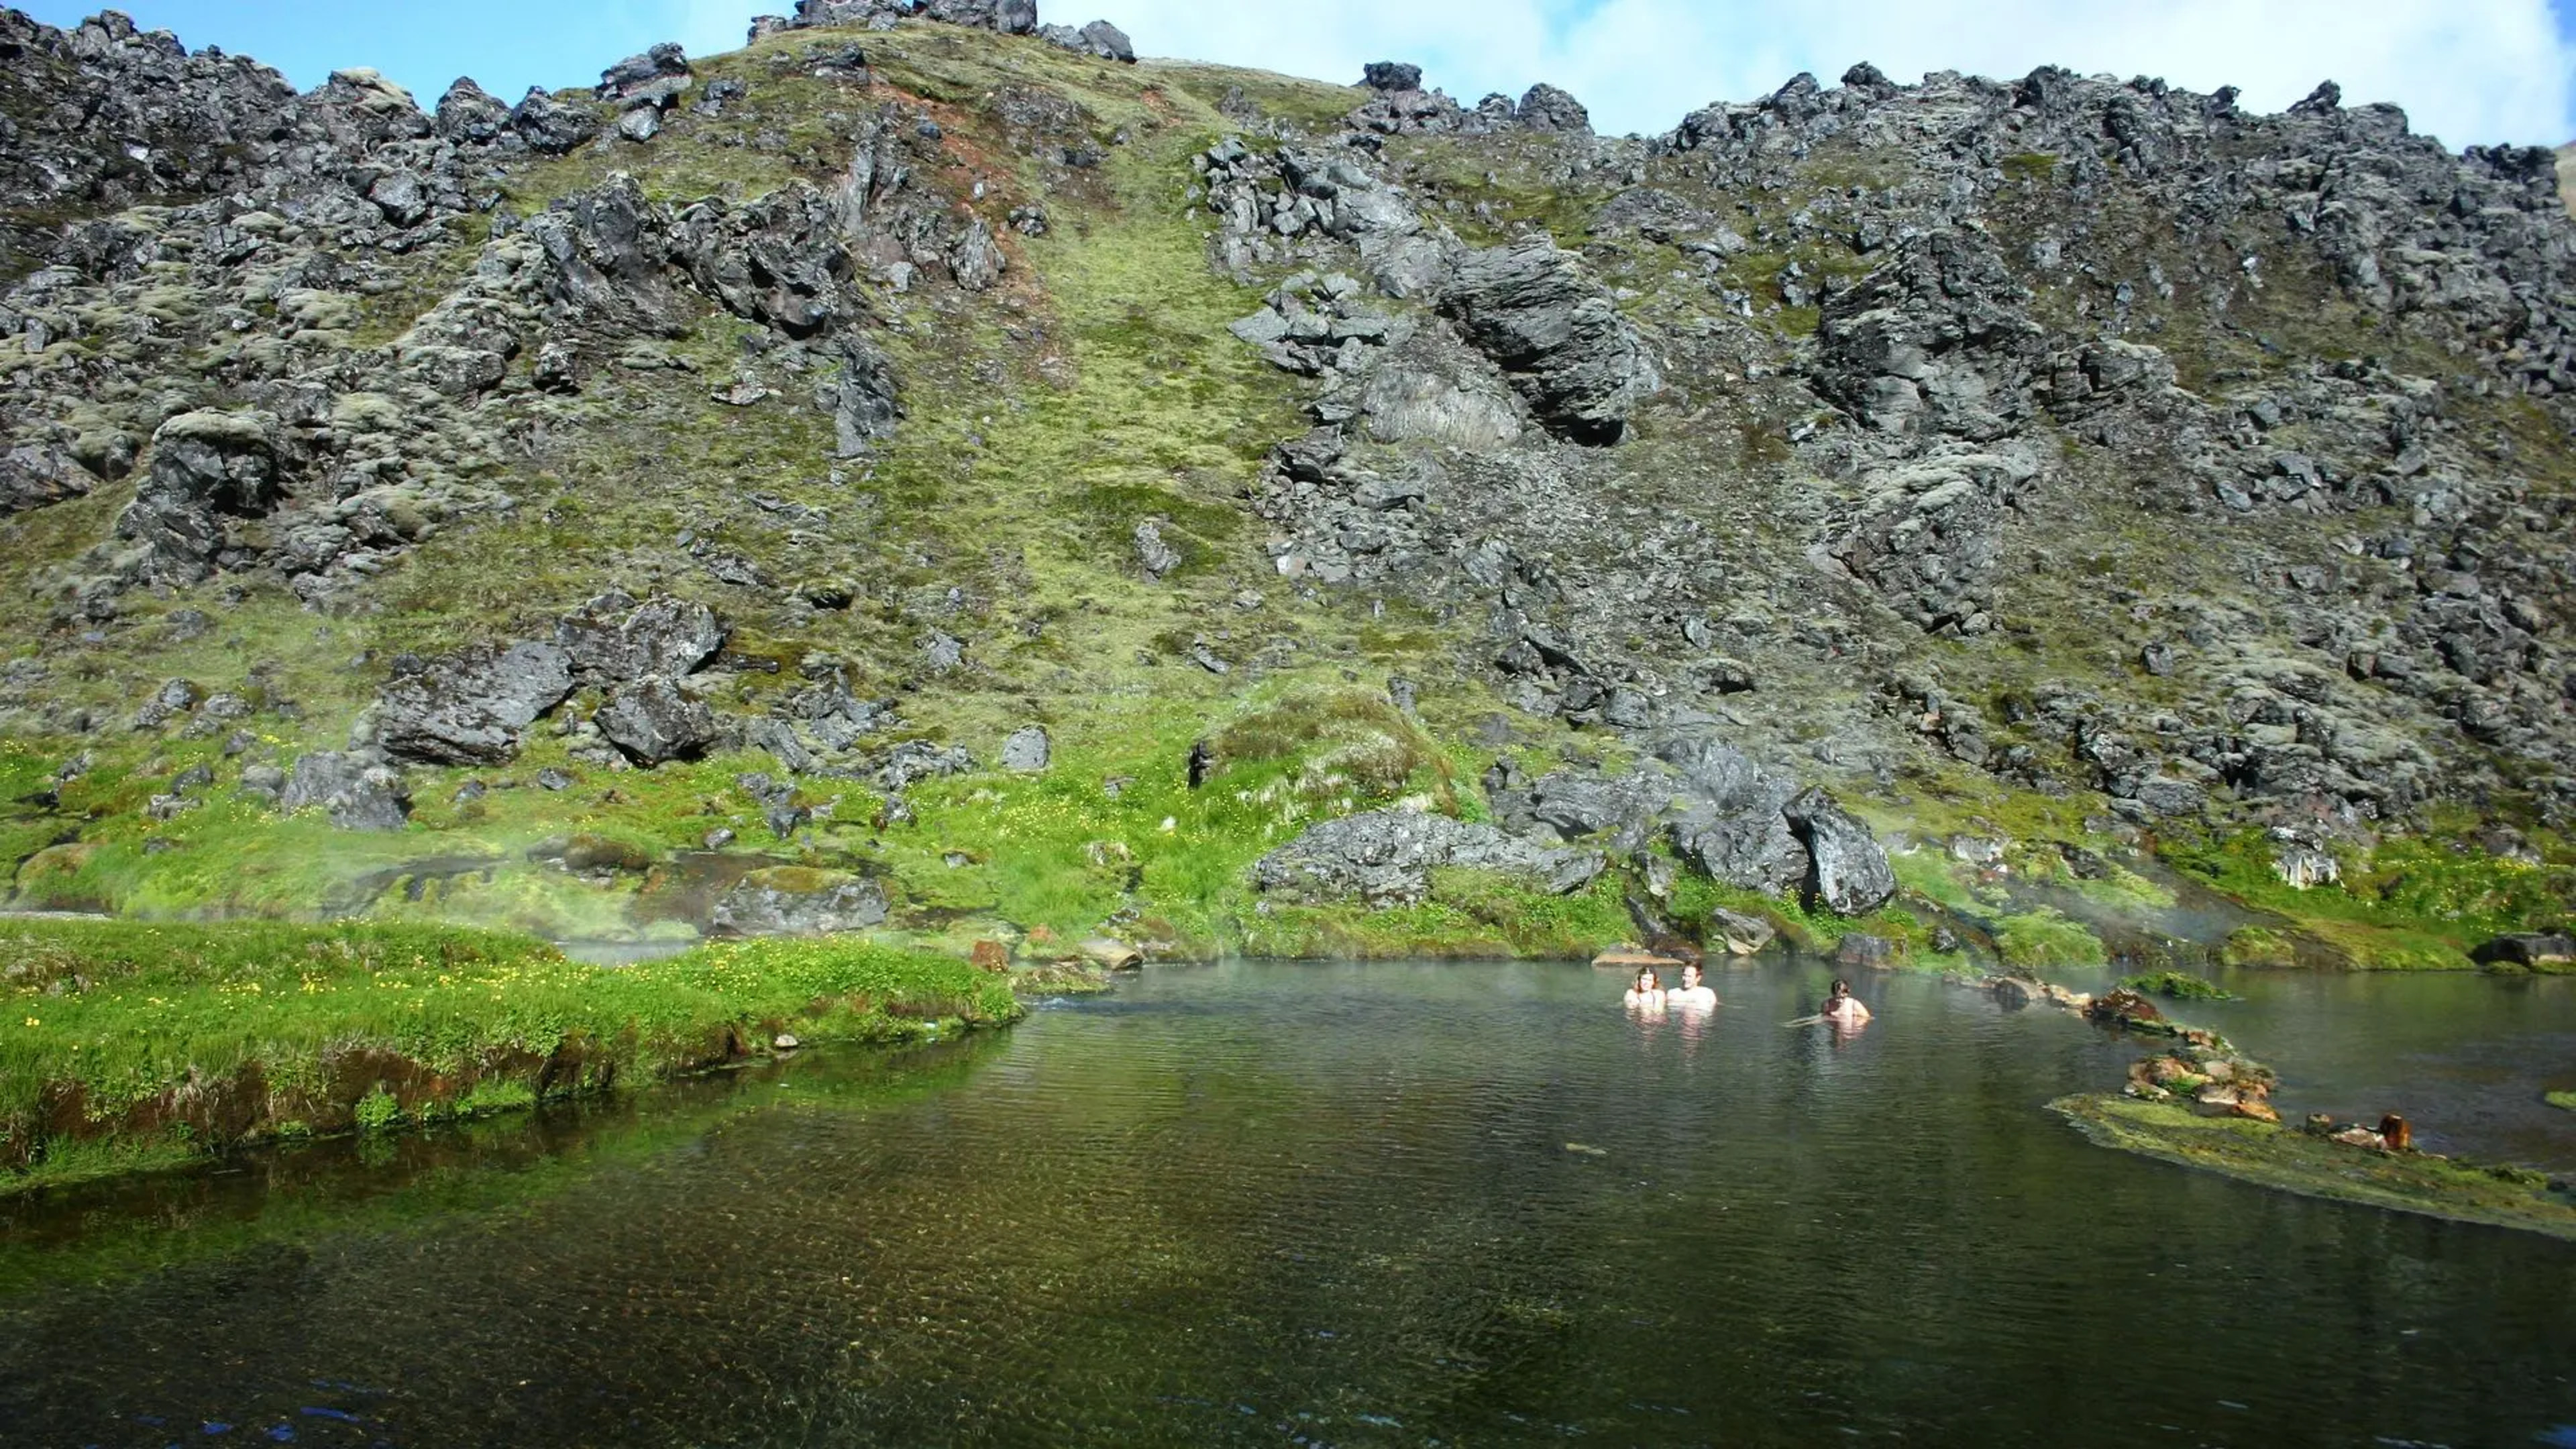 People bathing in the natural hot springs at Landmannalaugar